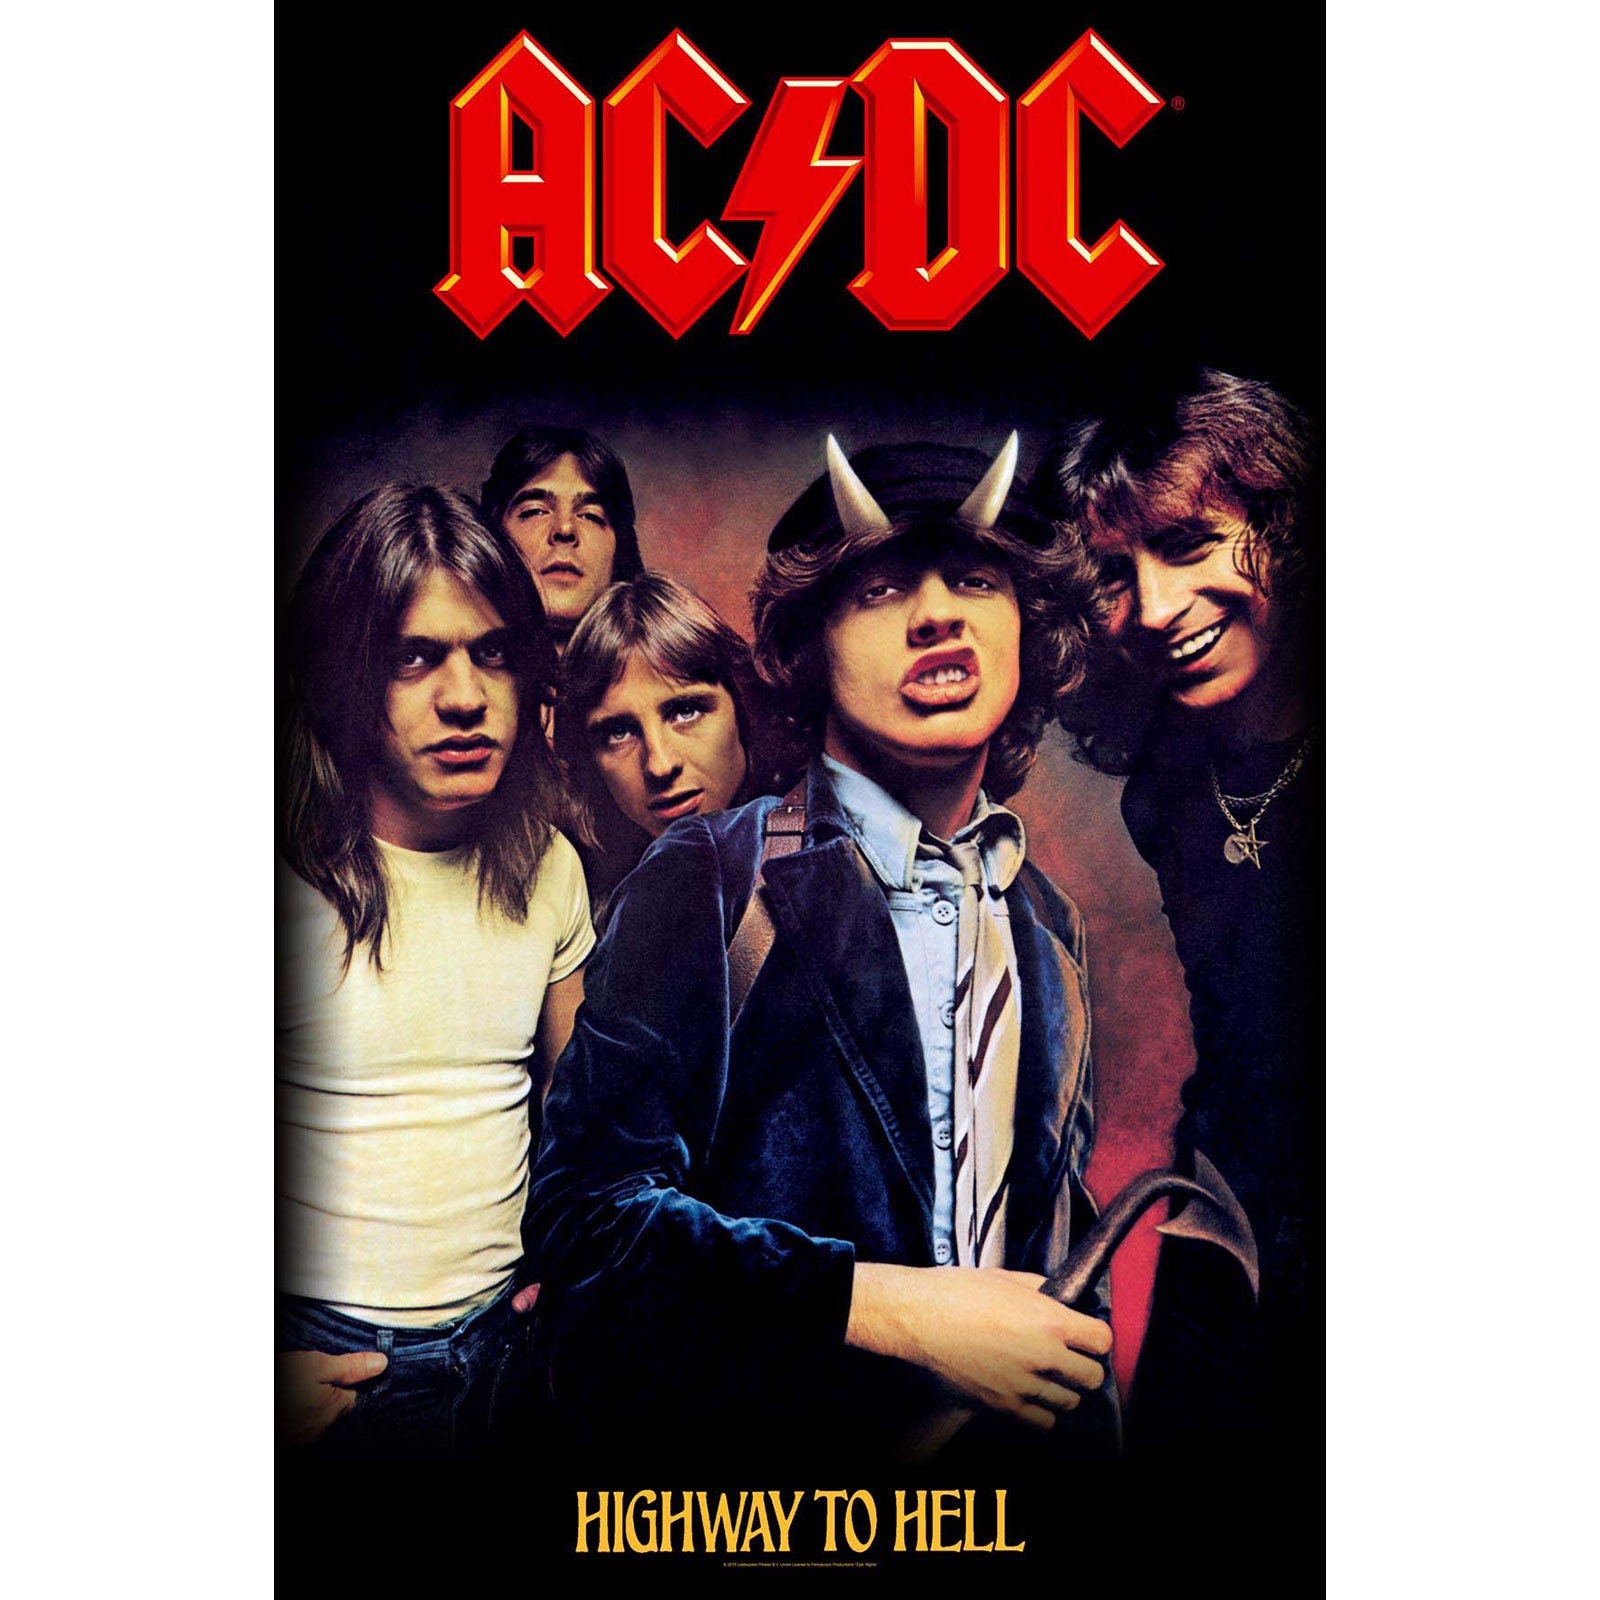 Acdc highway to hell. Группа AC/DC 1979. AC DC Highway to Hell обложка. Плакат AC DC Highway to Hell. ACDC gruppa постеры.